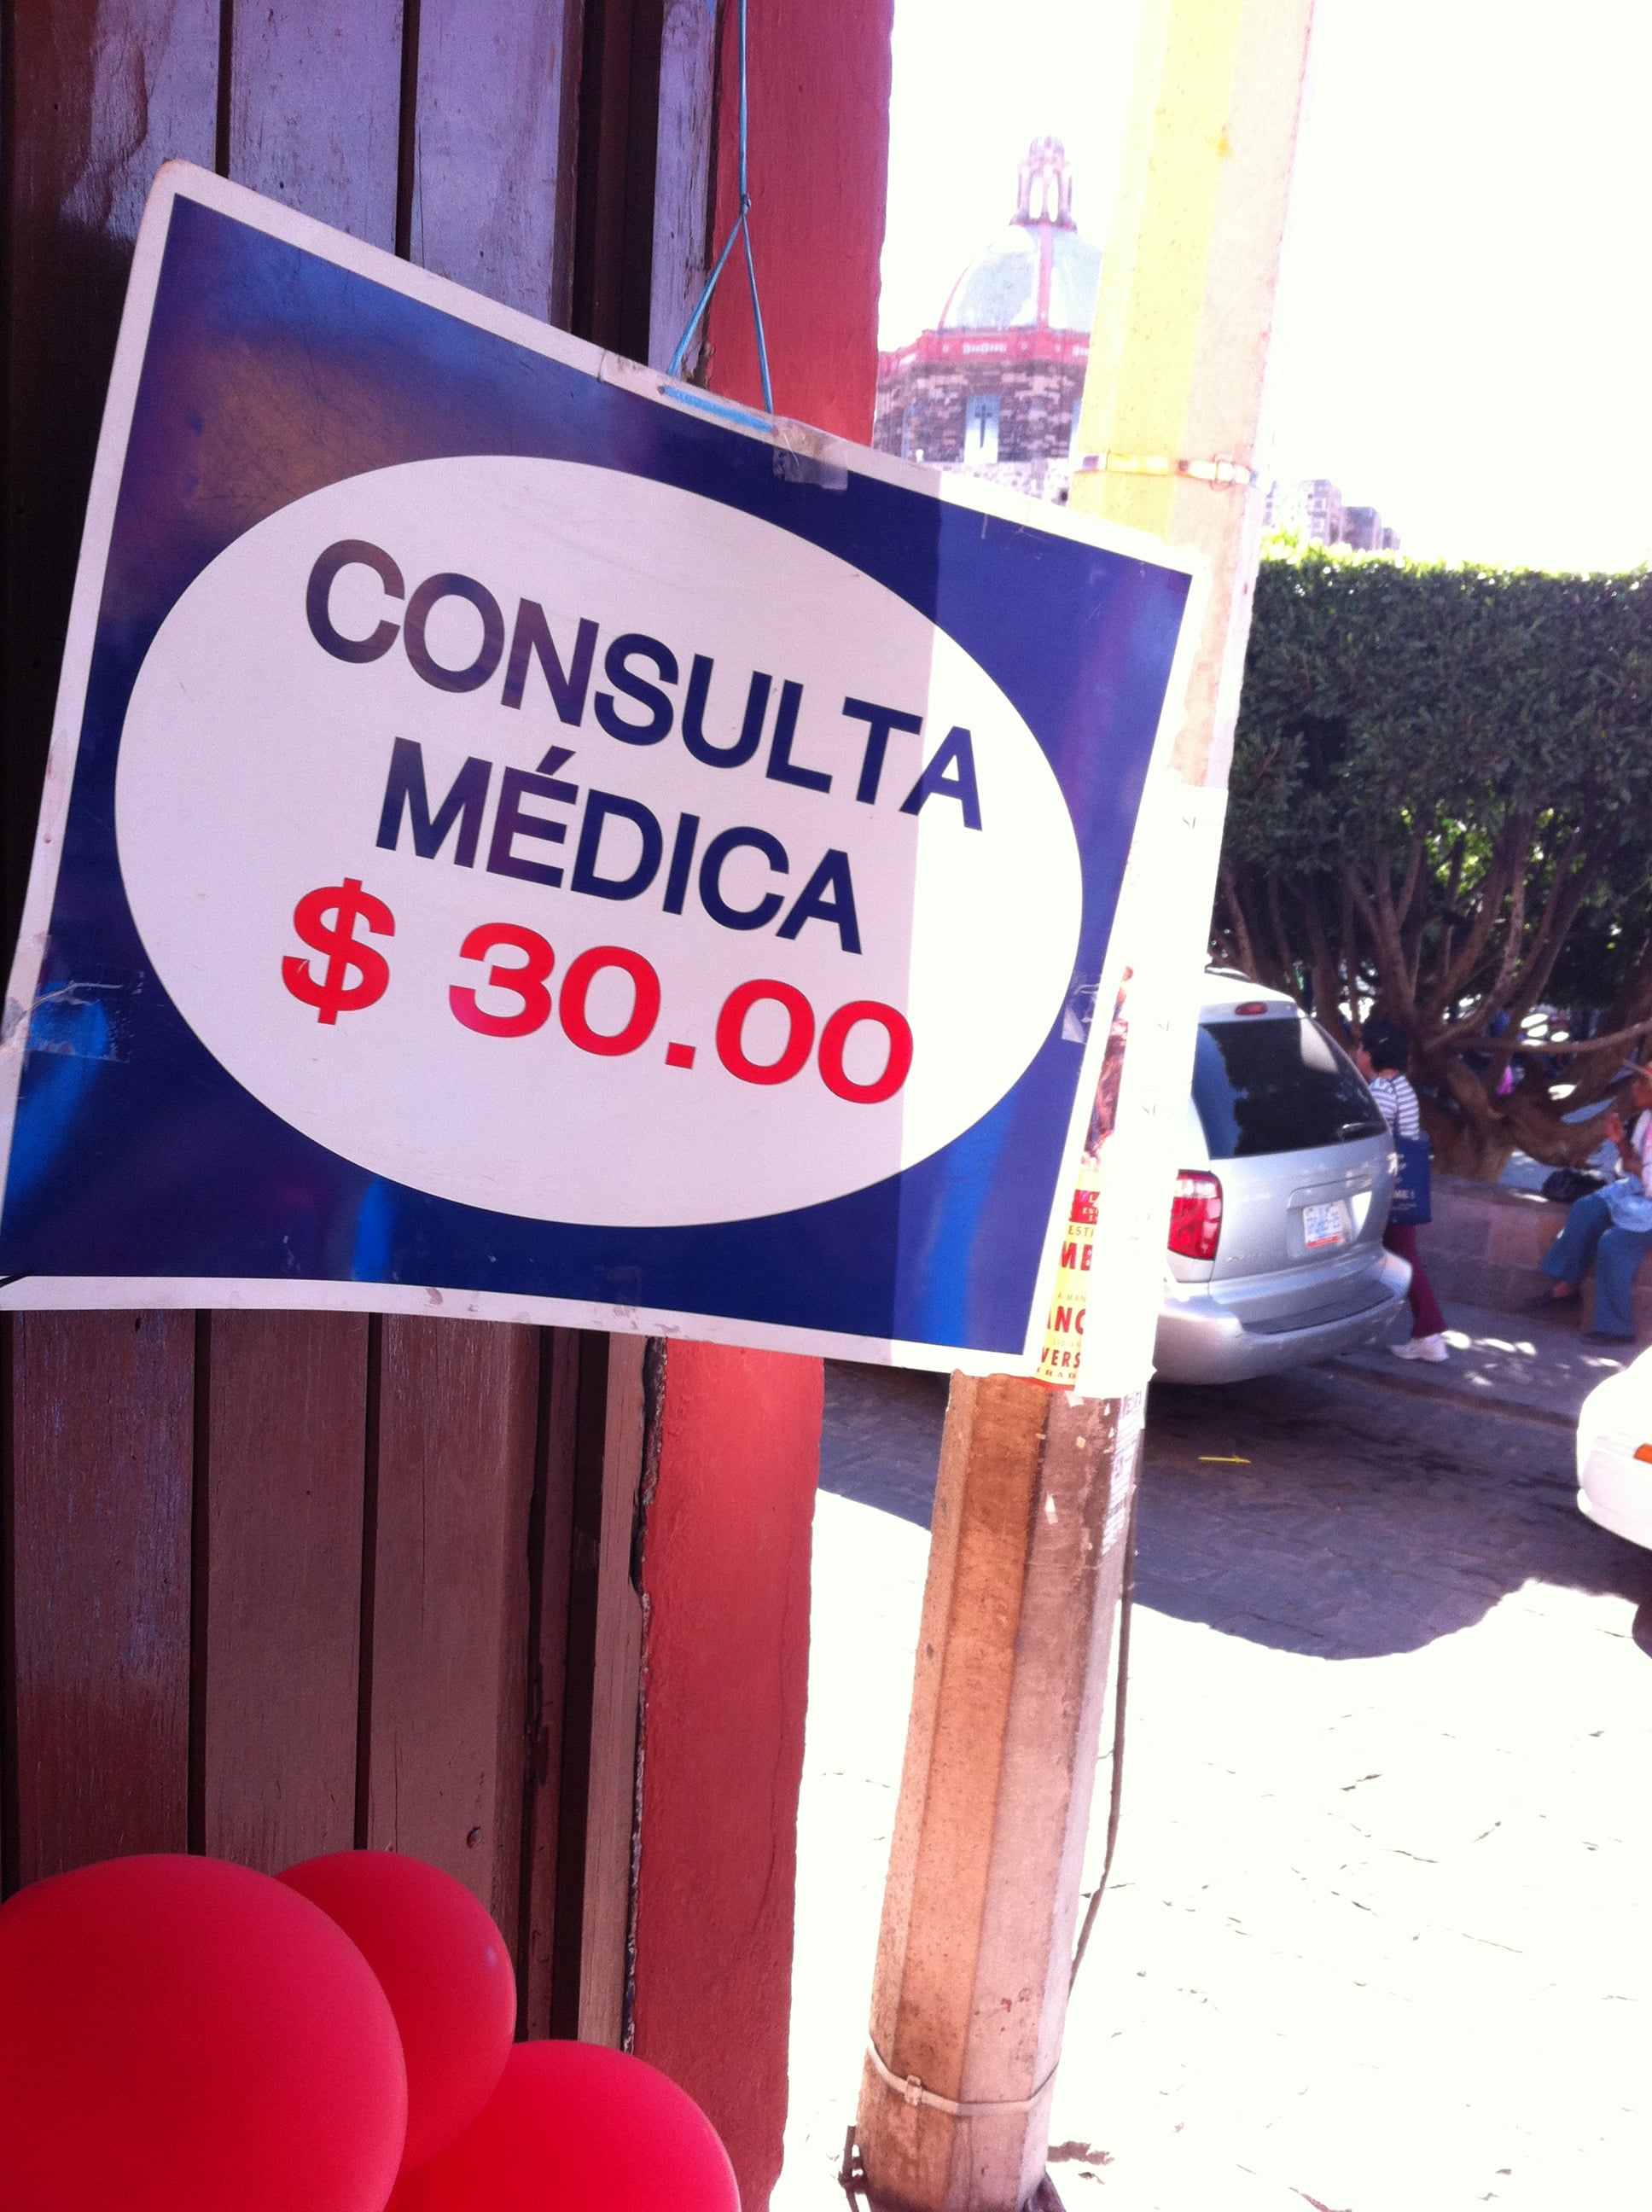 Doctor consultation, $2.50